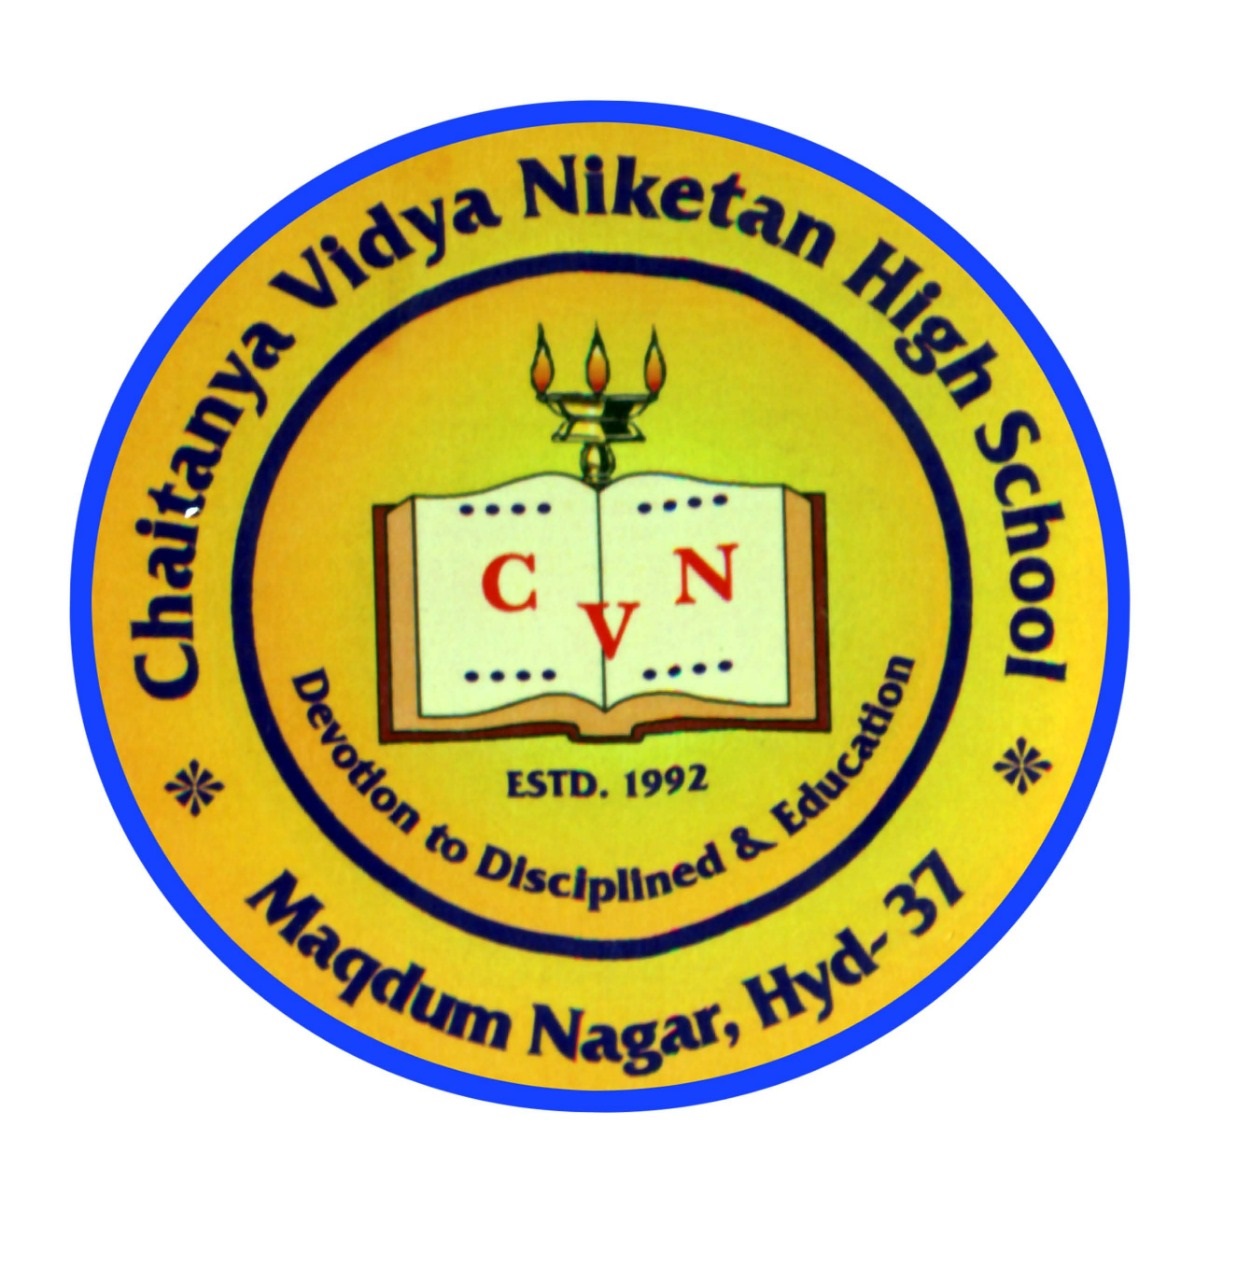 Chaitanya Vidya Niketan High School